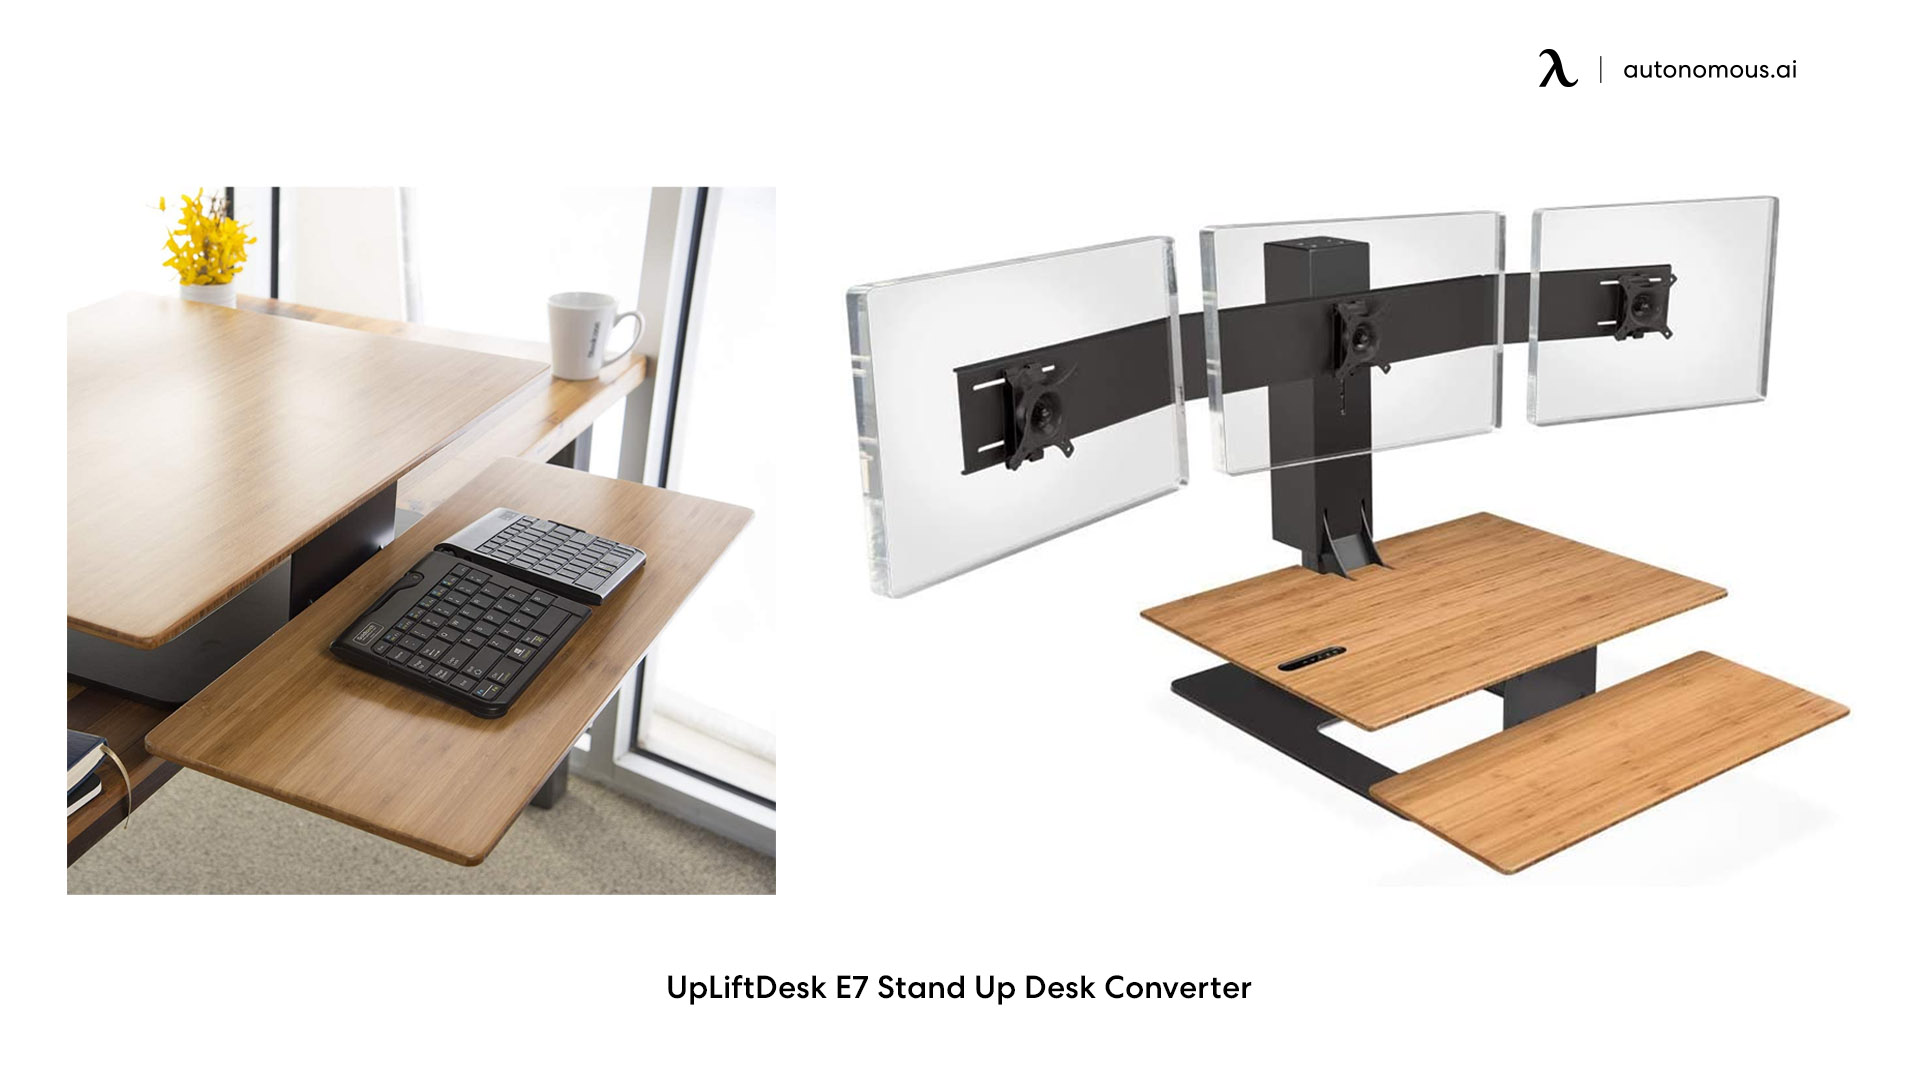 UpLiftDesk E7 compact standing desk converter